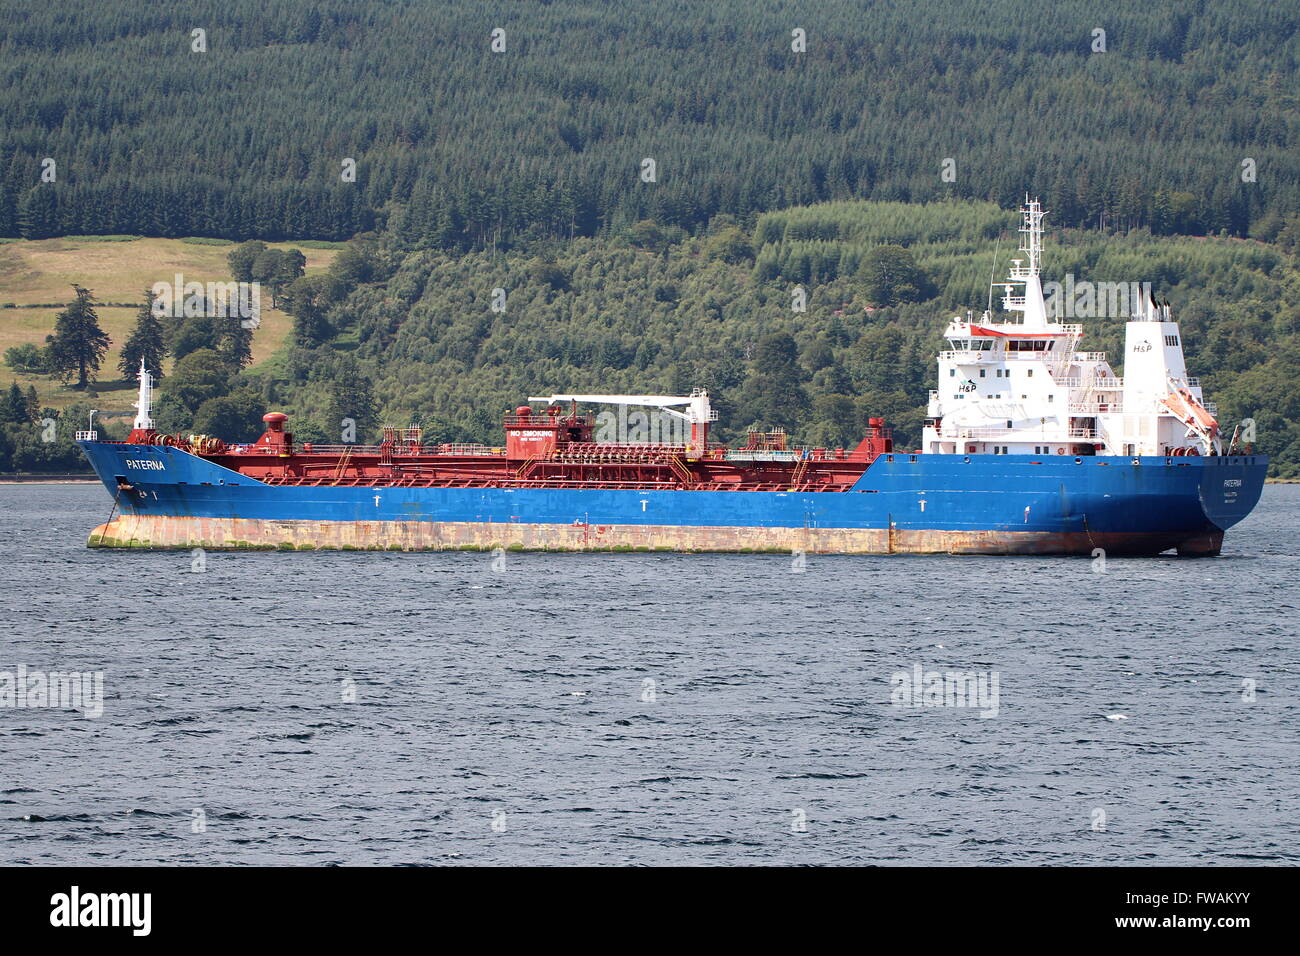 Öl oder Chemikalien Tanker Paterna vor Anker vor Brodick Bay auf der Isle of Arran. Stockfoto